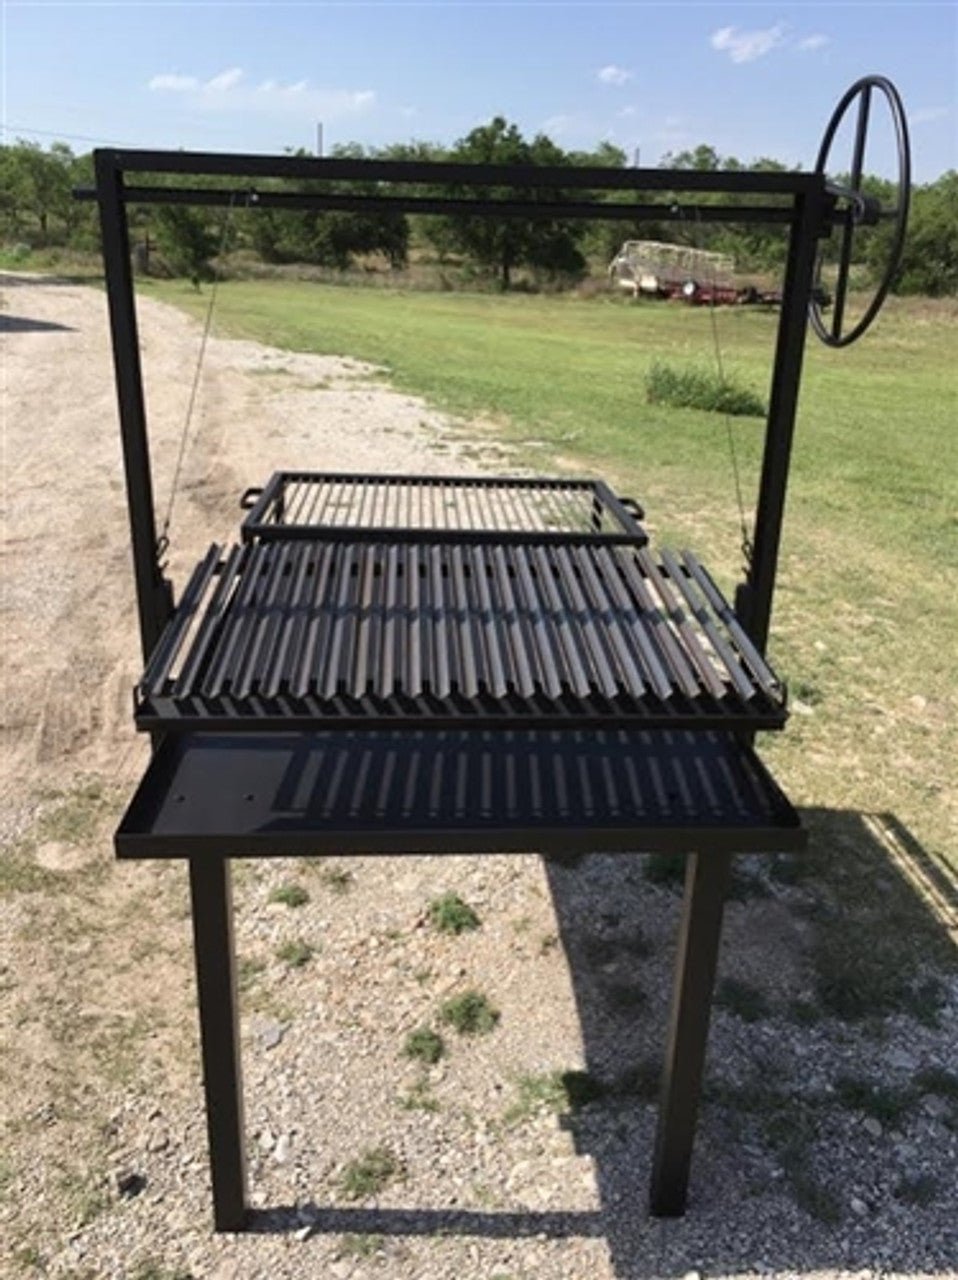 Portable Asado Fire Table - Heritage Backyard Inc.